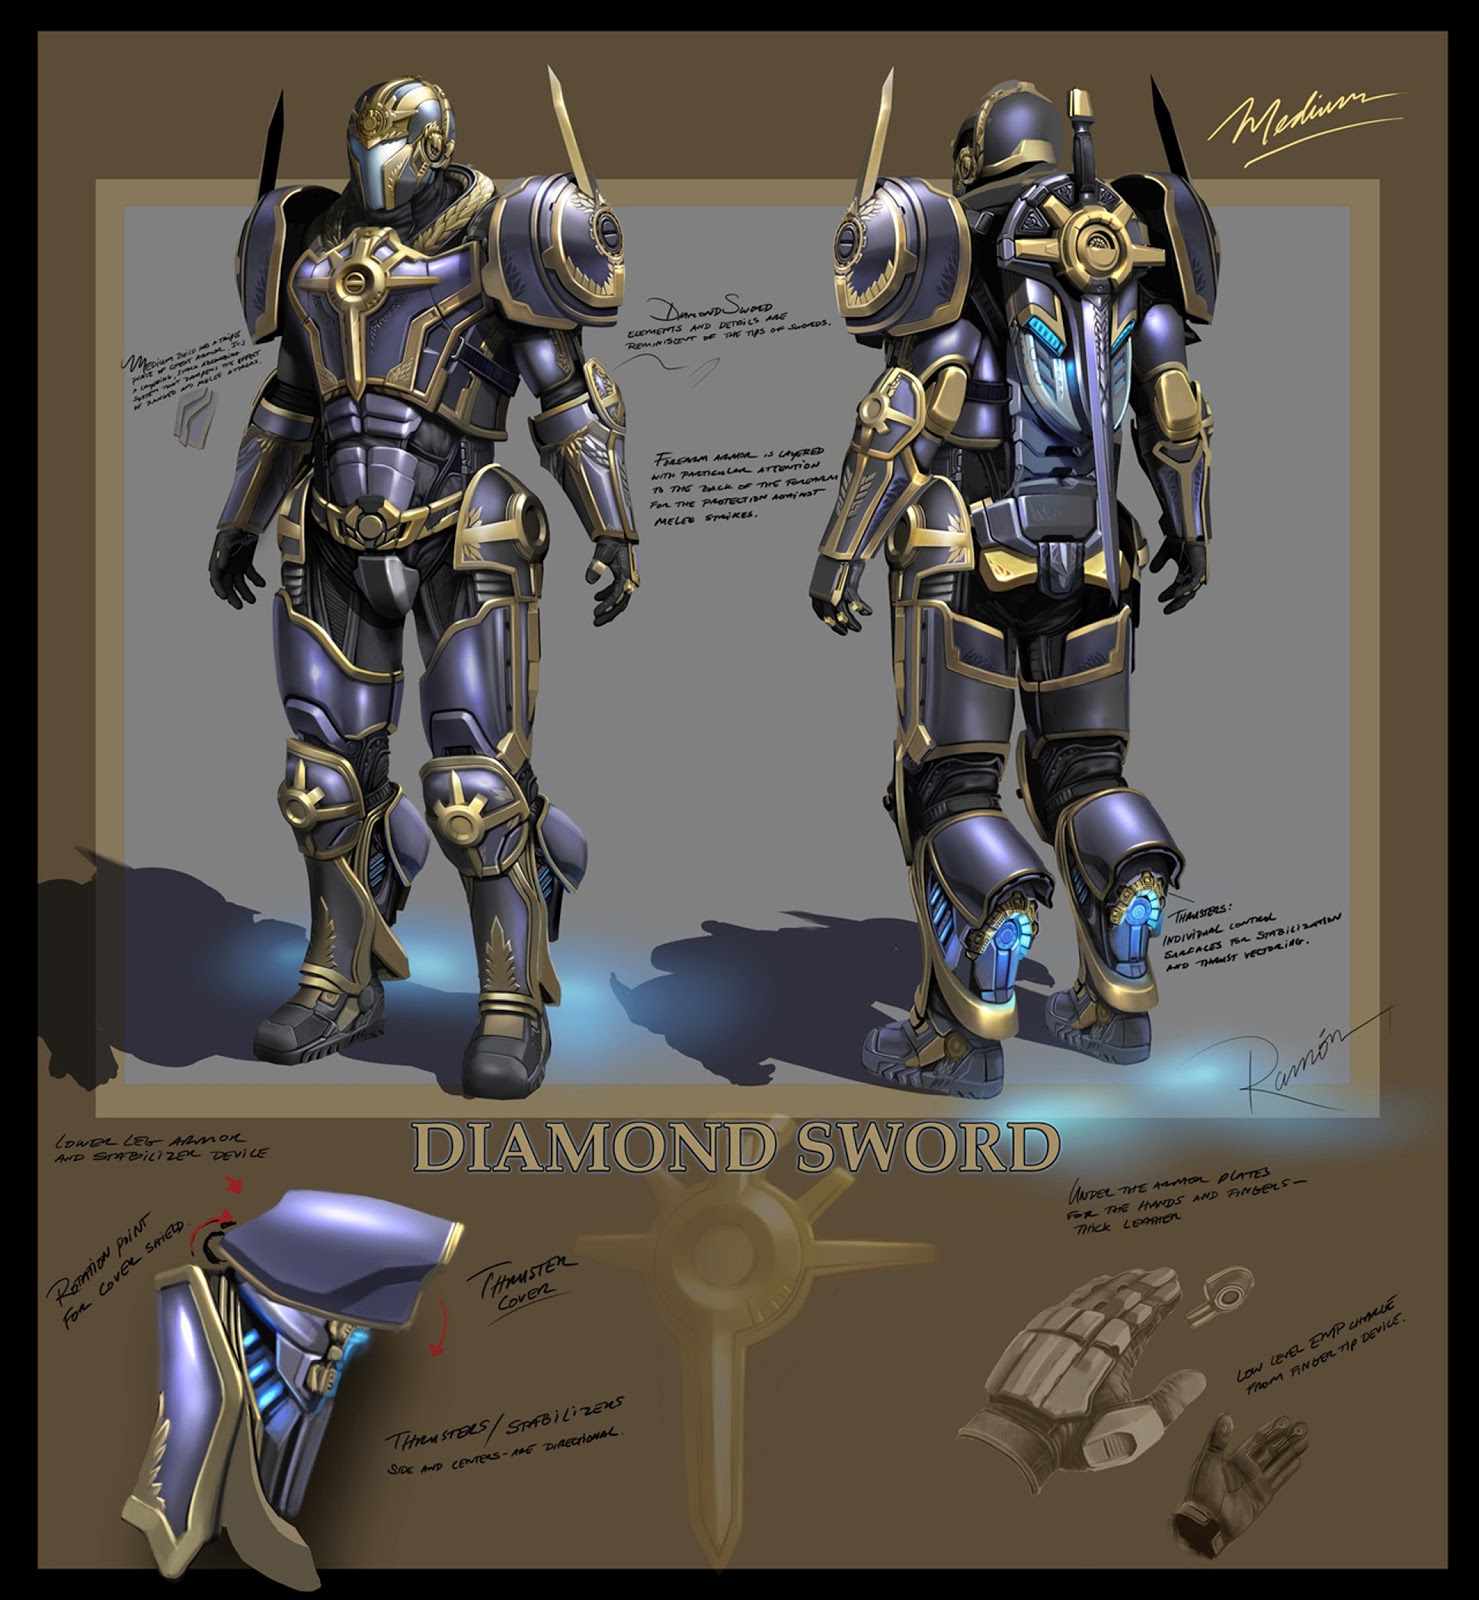 http://2.bp.blogspot.com/-oQ4IME5WyjY/UJNvRVWZTSI/AAAAAAAAHQo/_zJBLHLsGm8/s1600/tribes+ascend+medium+INFANRTY+exo+suit+space+diamond+sword+armor+halo+4+sci+fi+soldier+concept+design+cyborg+costume+3d+4.jpg